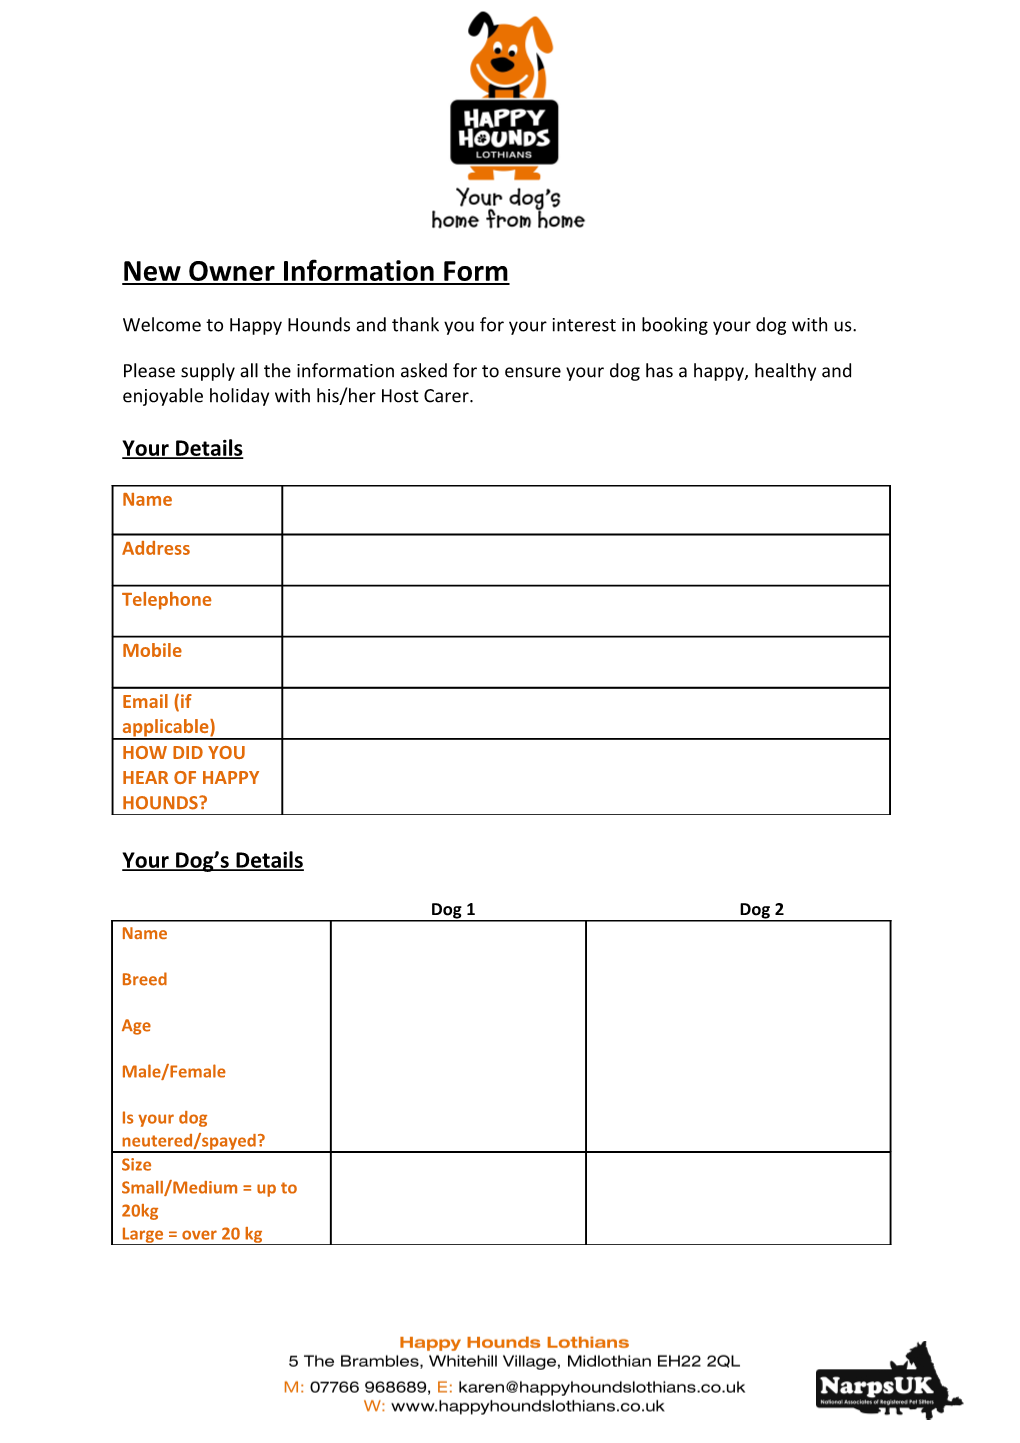 New Owner Information Form